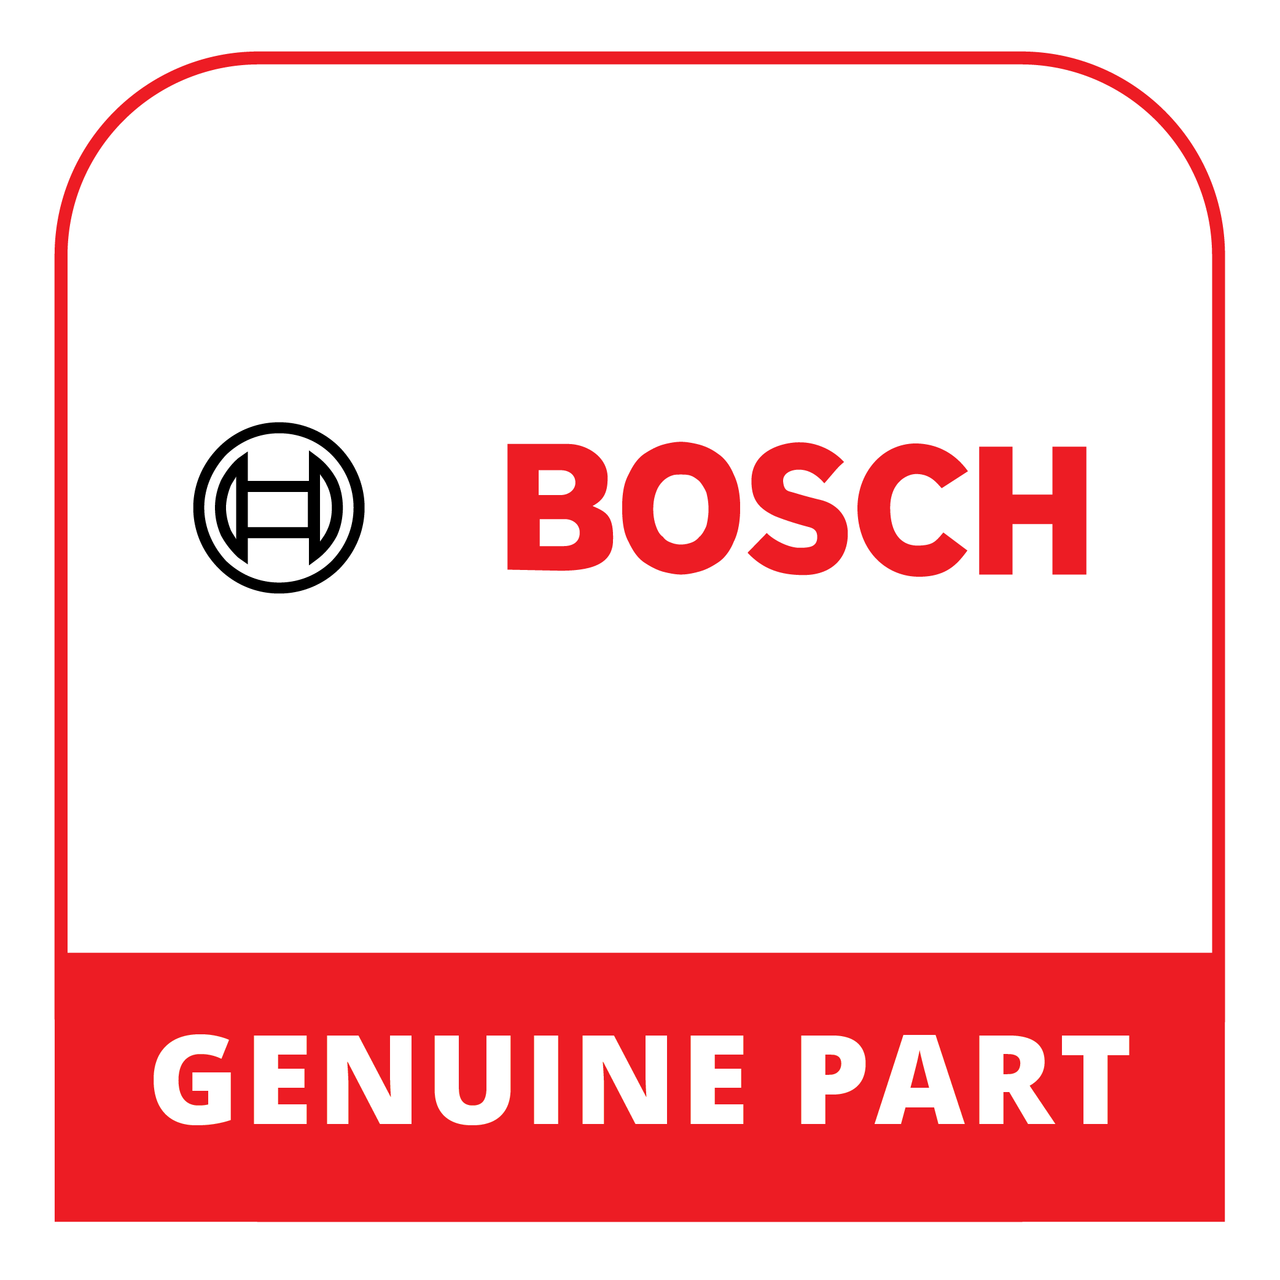 Bosch (Thermador) 10019104 - Smm Programmed - Genuine Bosch (Thermador) Part